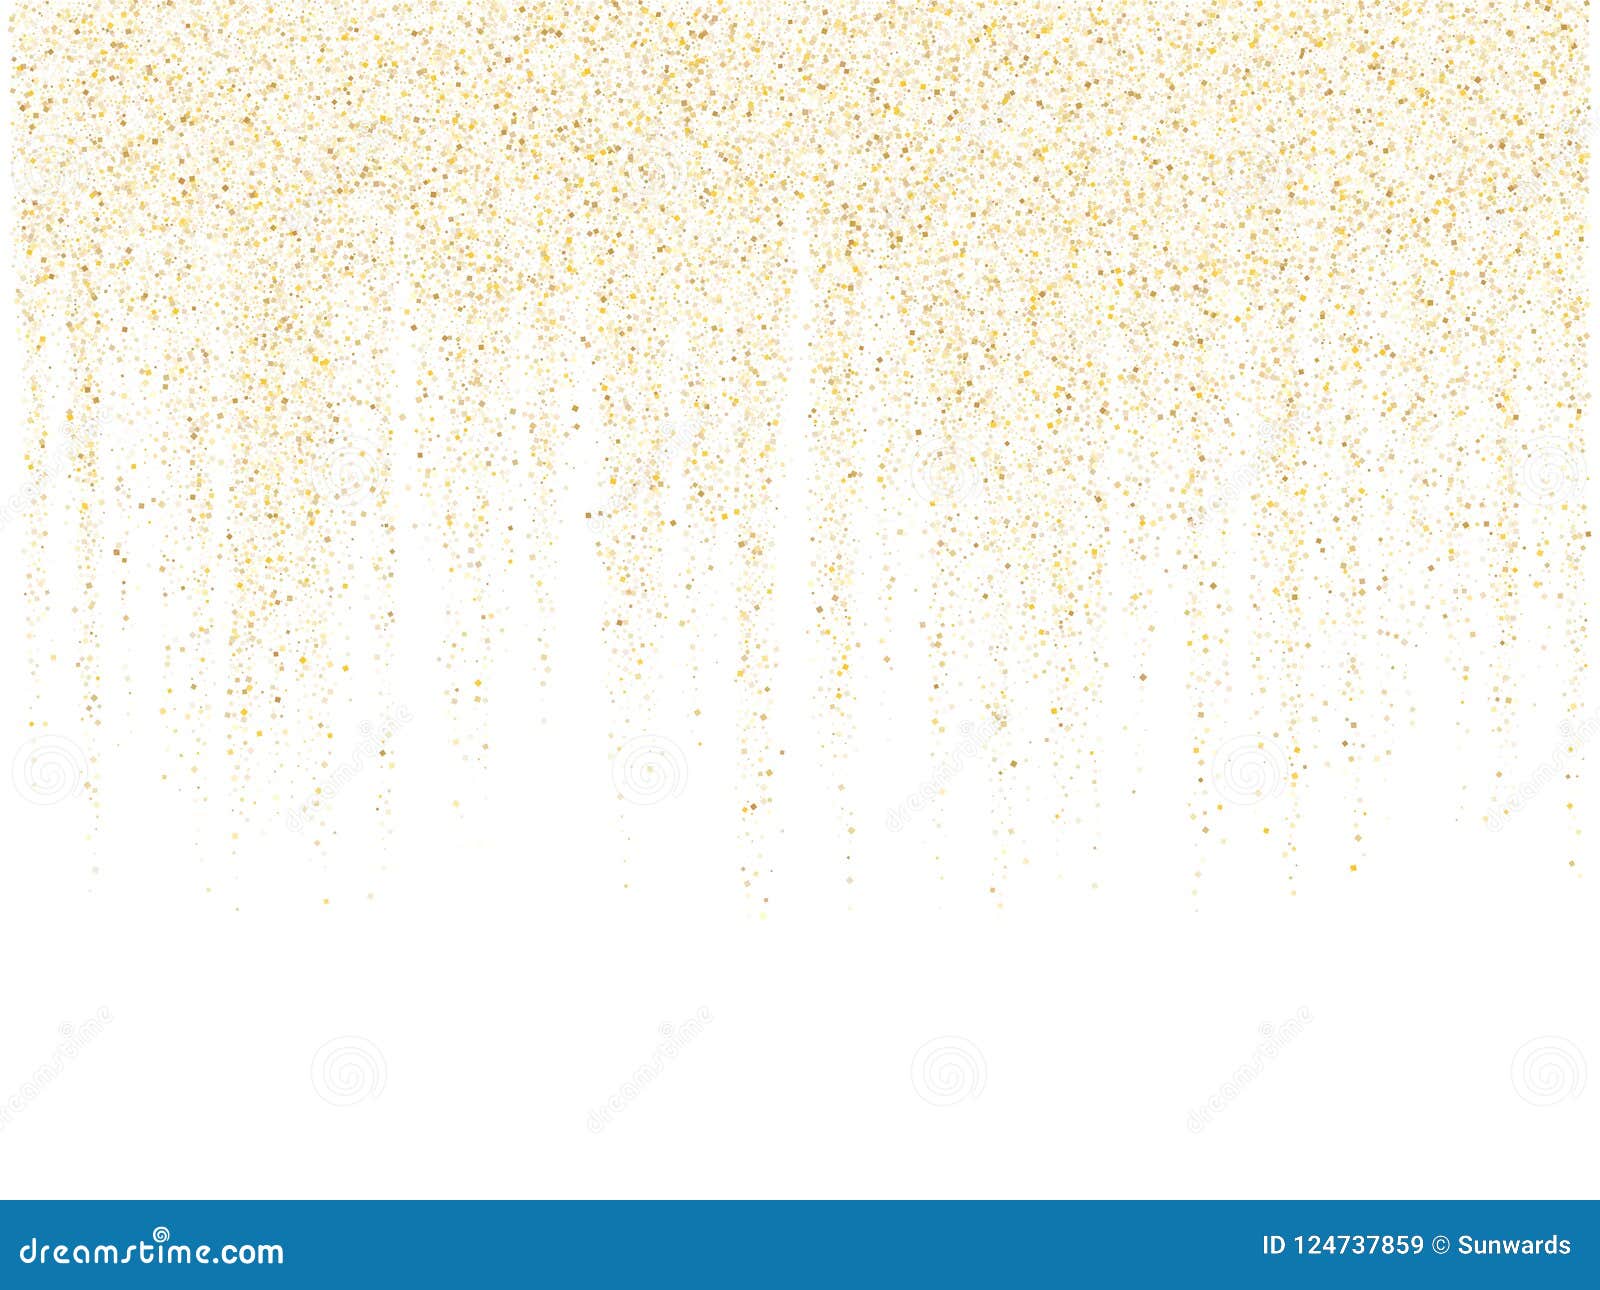 Download Garland Border Gold Glitter Vector Background Illustration Stock Vector Illustration of hanging